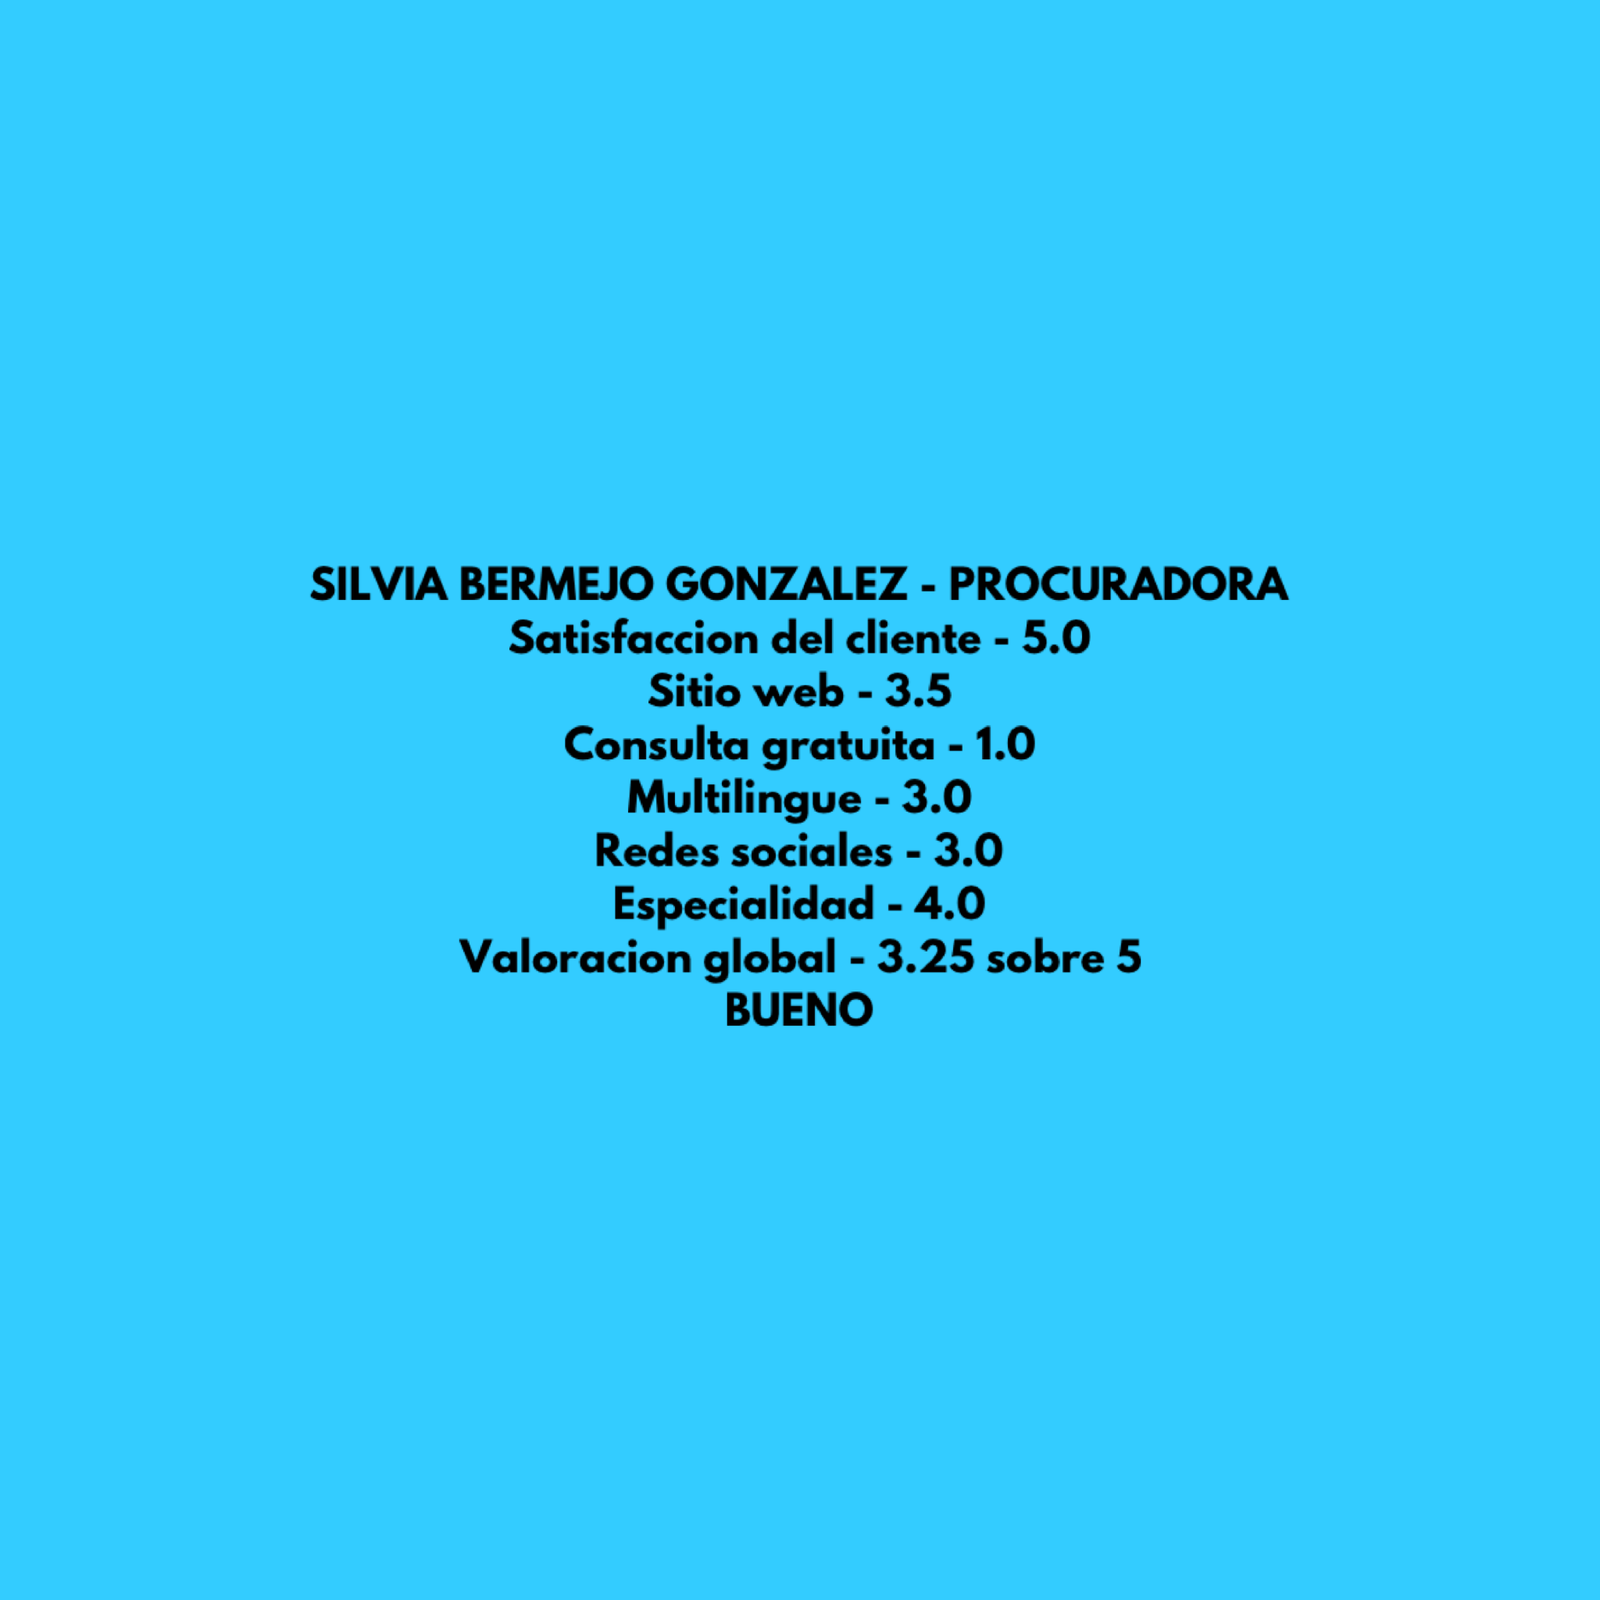 Silvia Bermejo Gonzalez - Procuradora